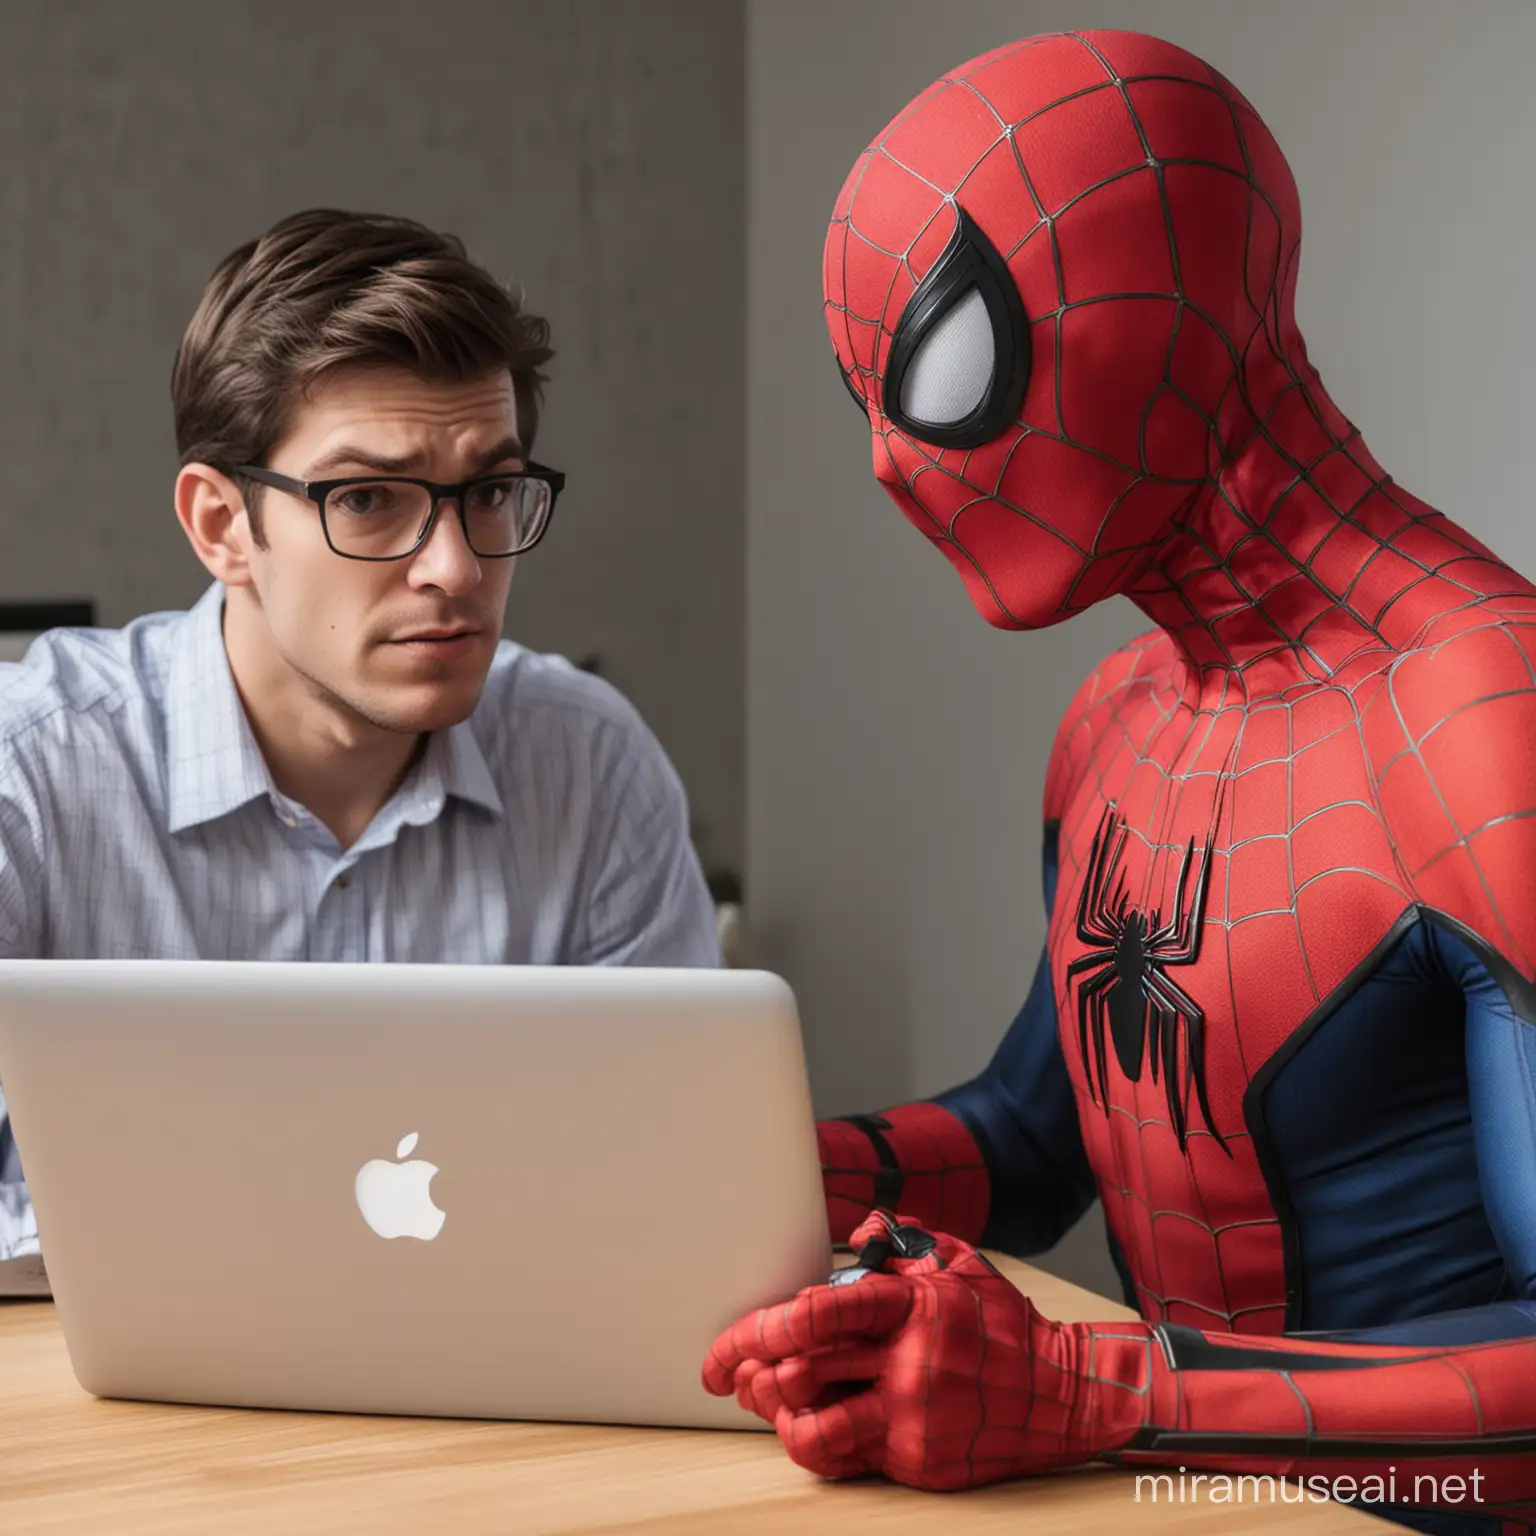 Spiderman Frontend Engineer Advising on MacBook Pro